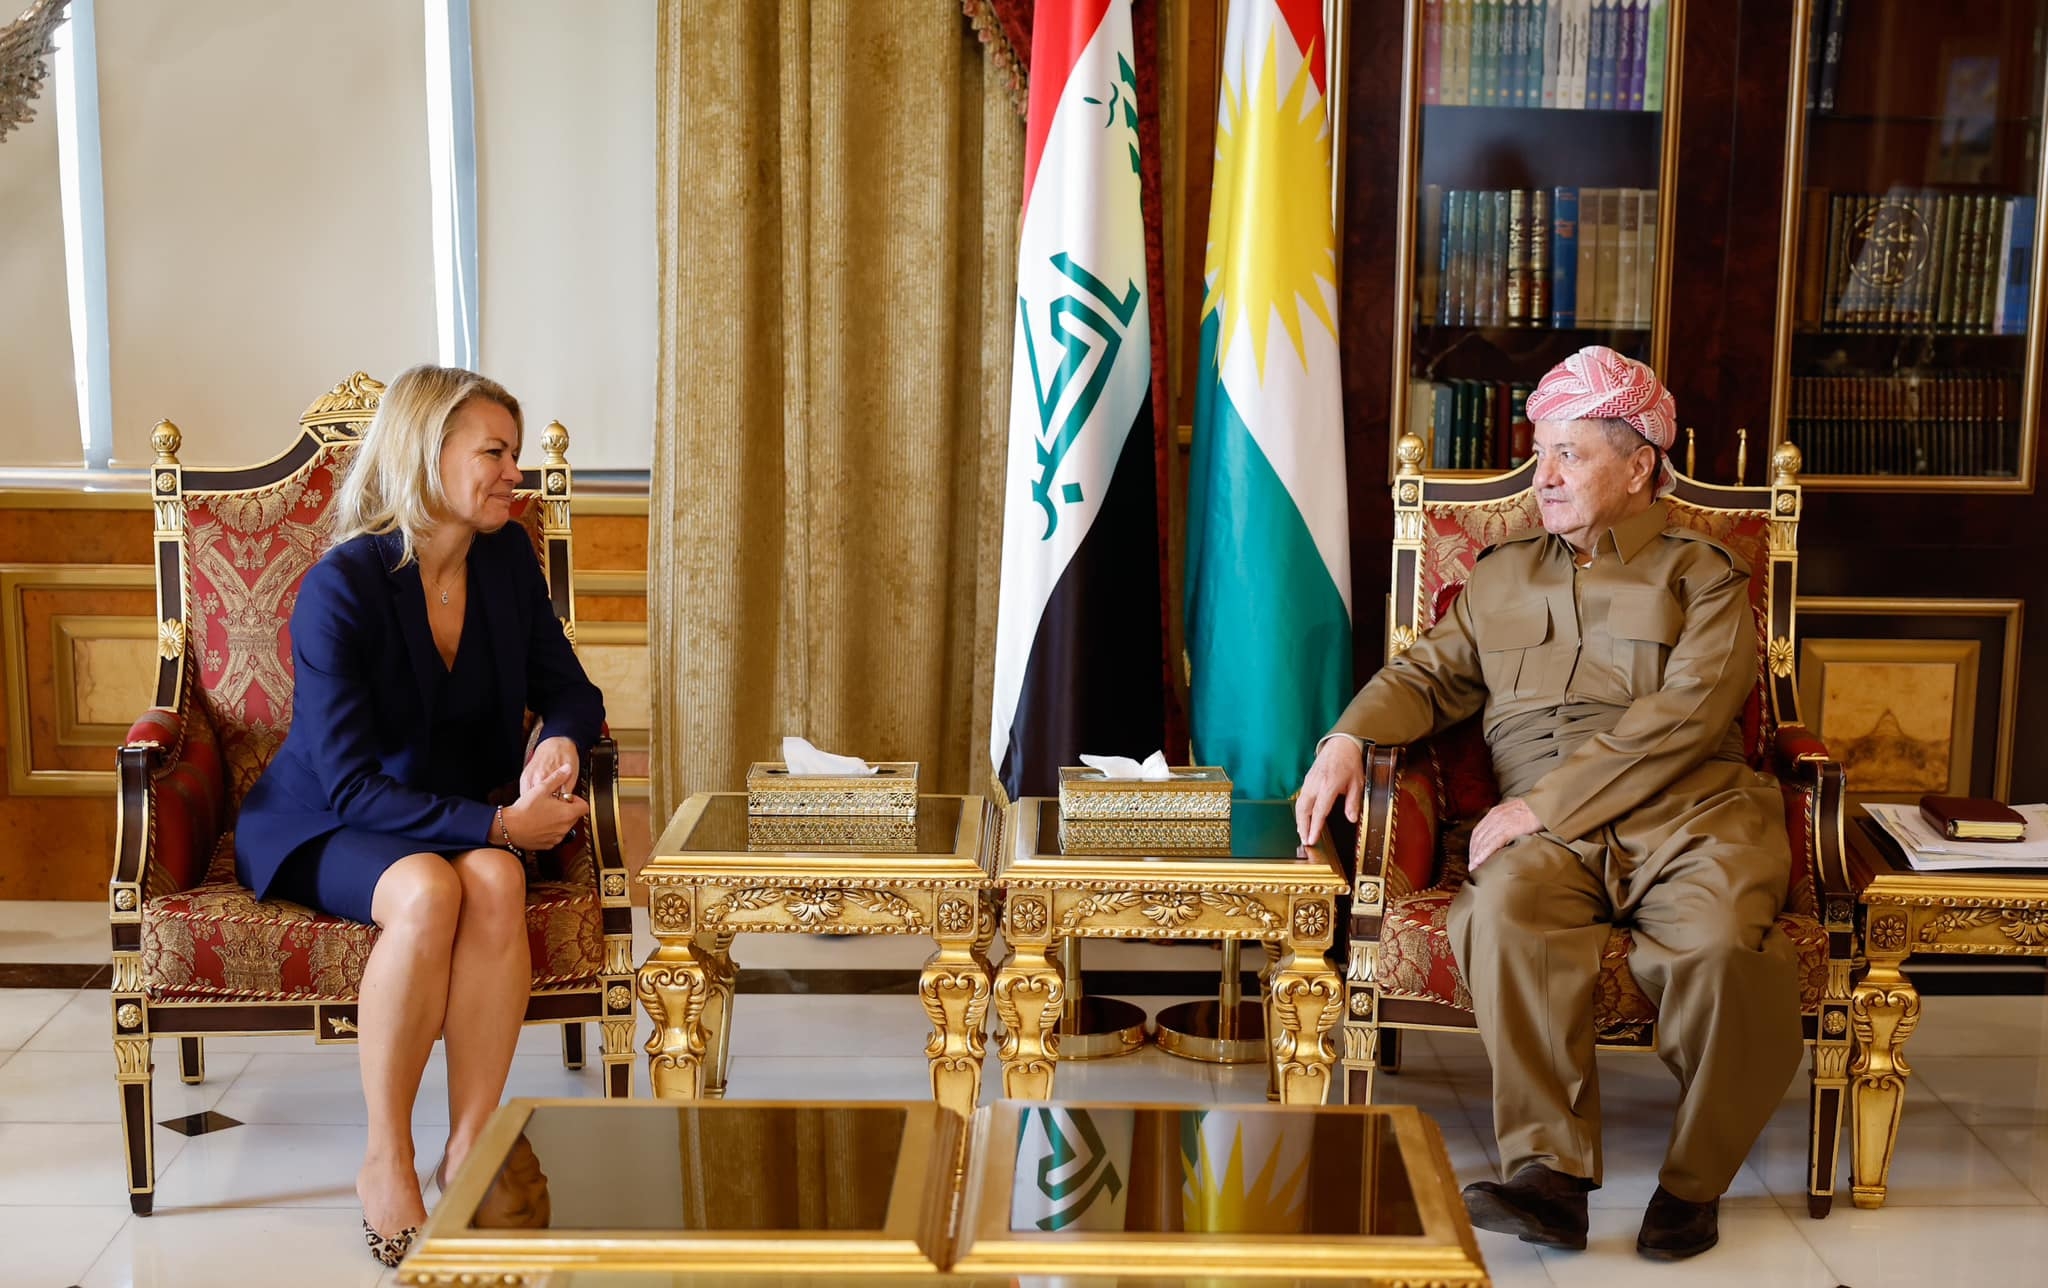 President Massoud Barzani Meets British Consul General in Erbil, Celebrates Bilateral Relations